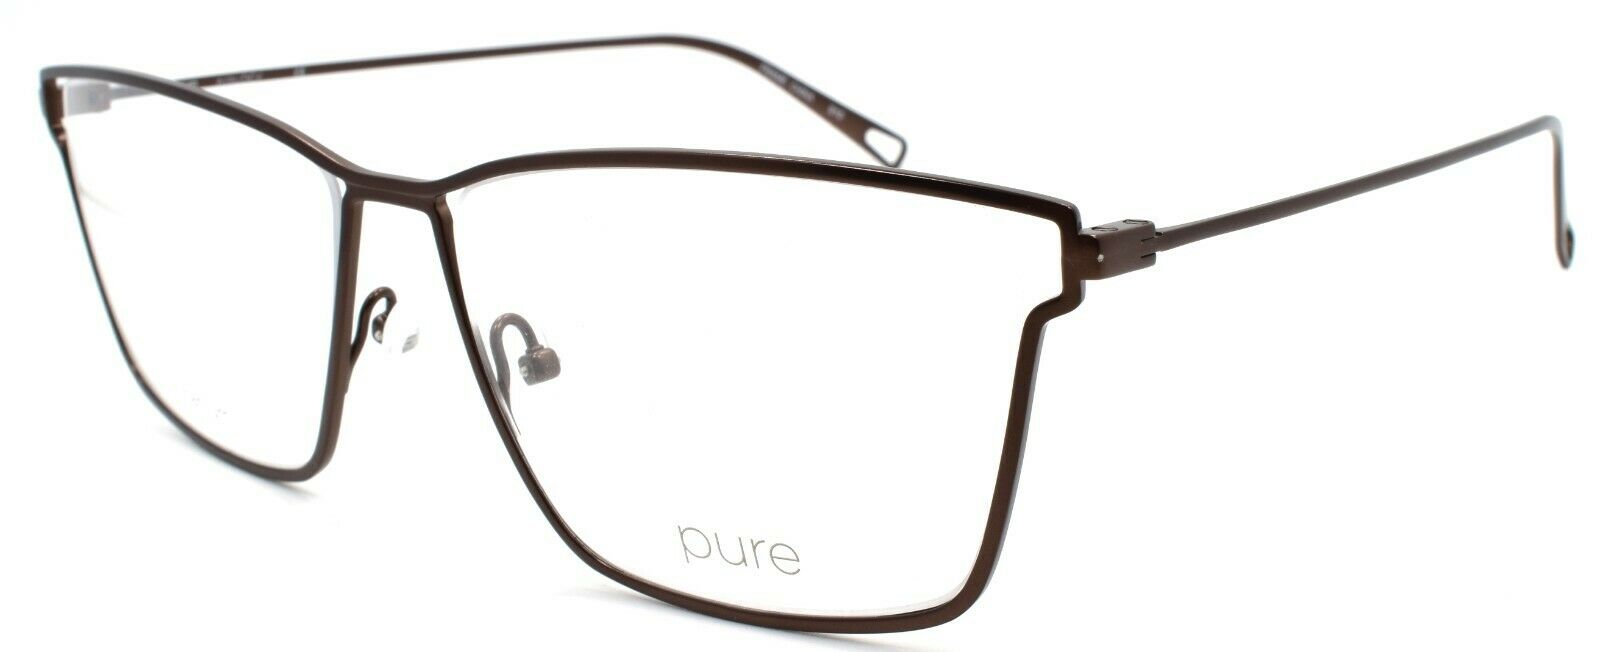 1-Marchon Airlock 4000 210 Men's Eyeglasses Frames Titanium 58-17-140 Brown-886895459020-IKSpecs